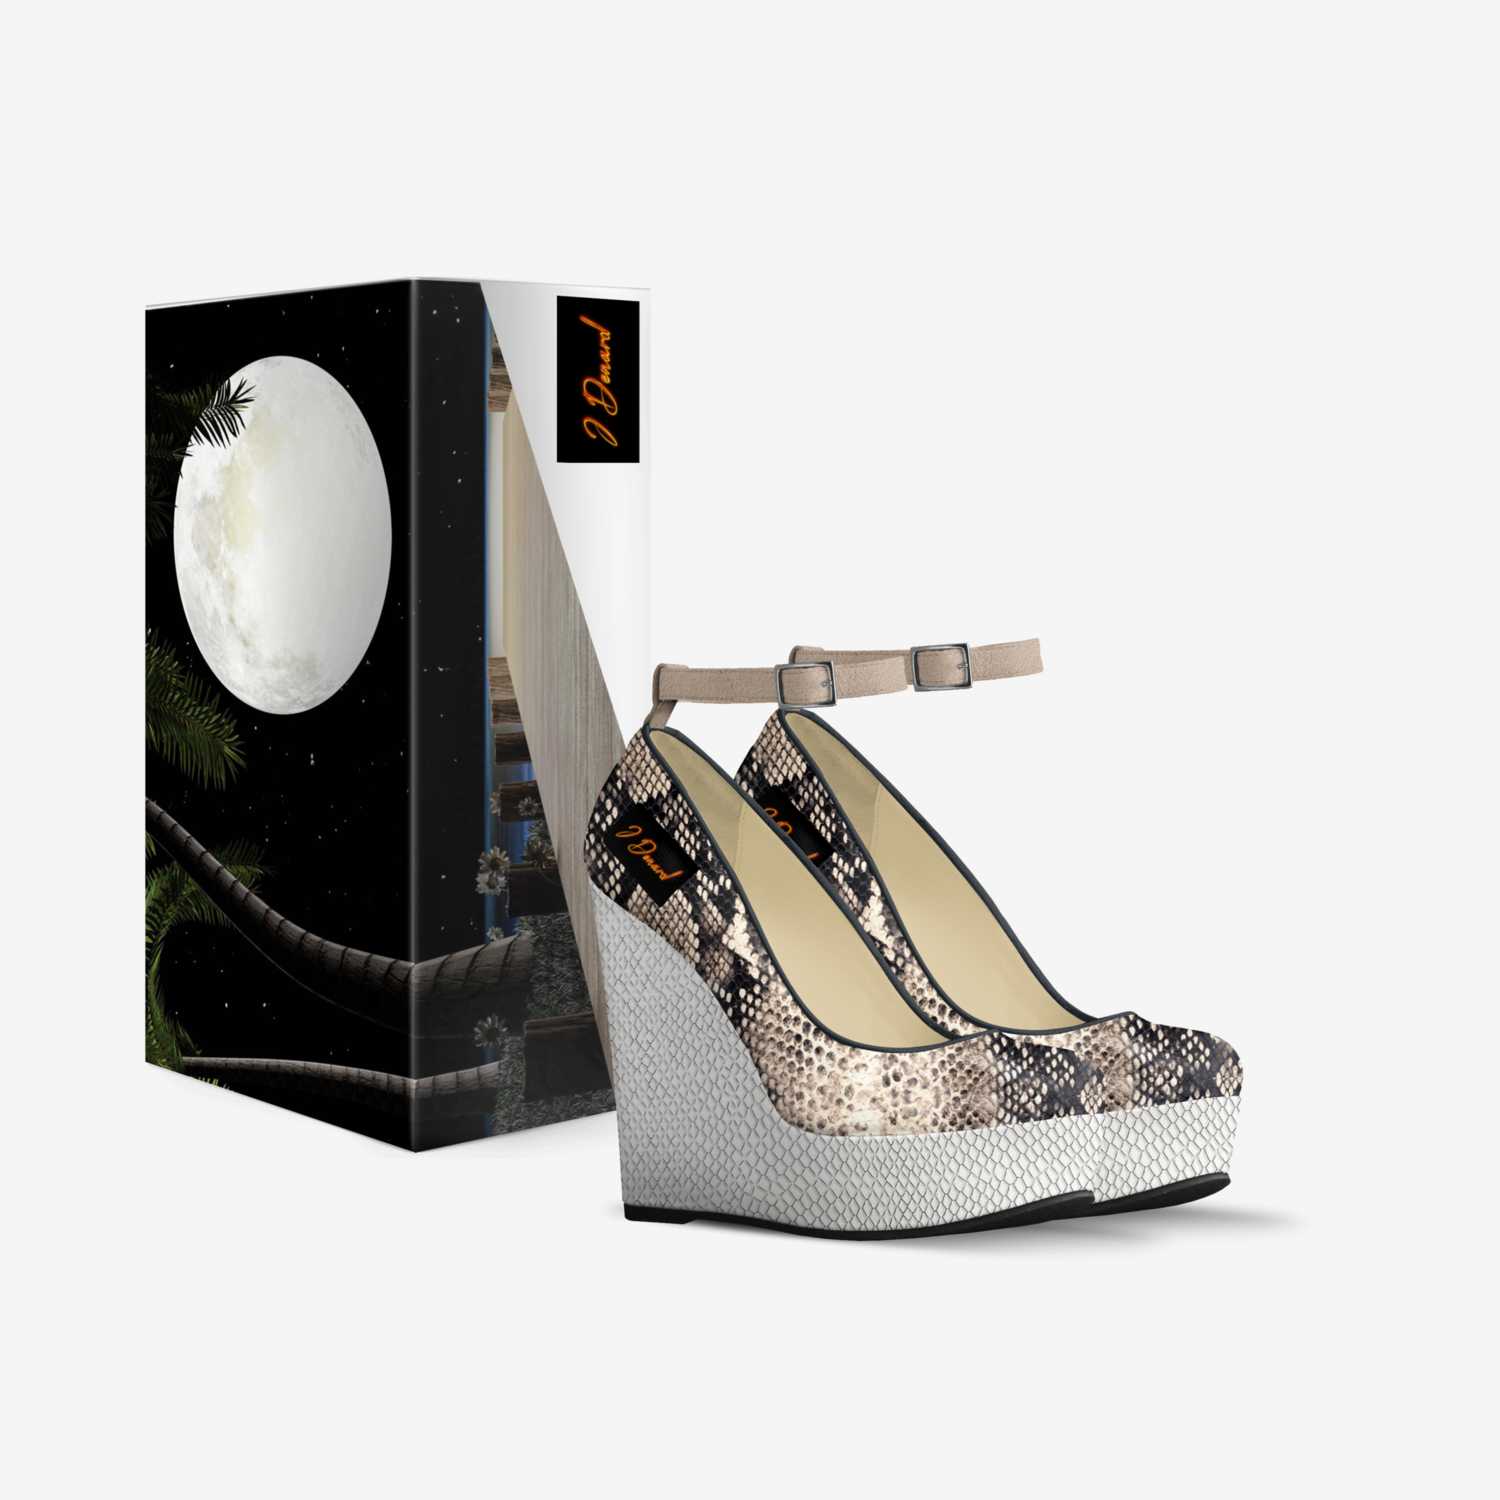 J Denard  custom made in Italy shoes by Jarrod Dixon | Box view